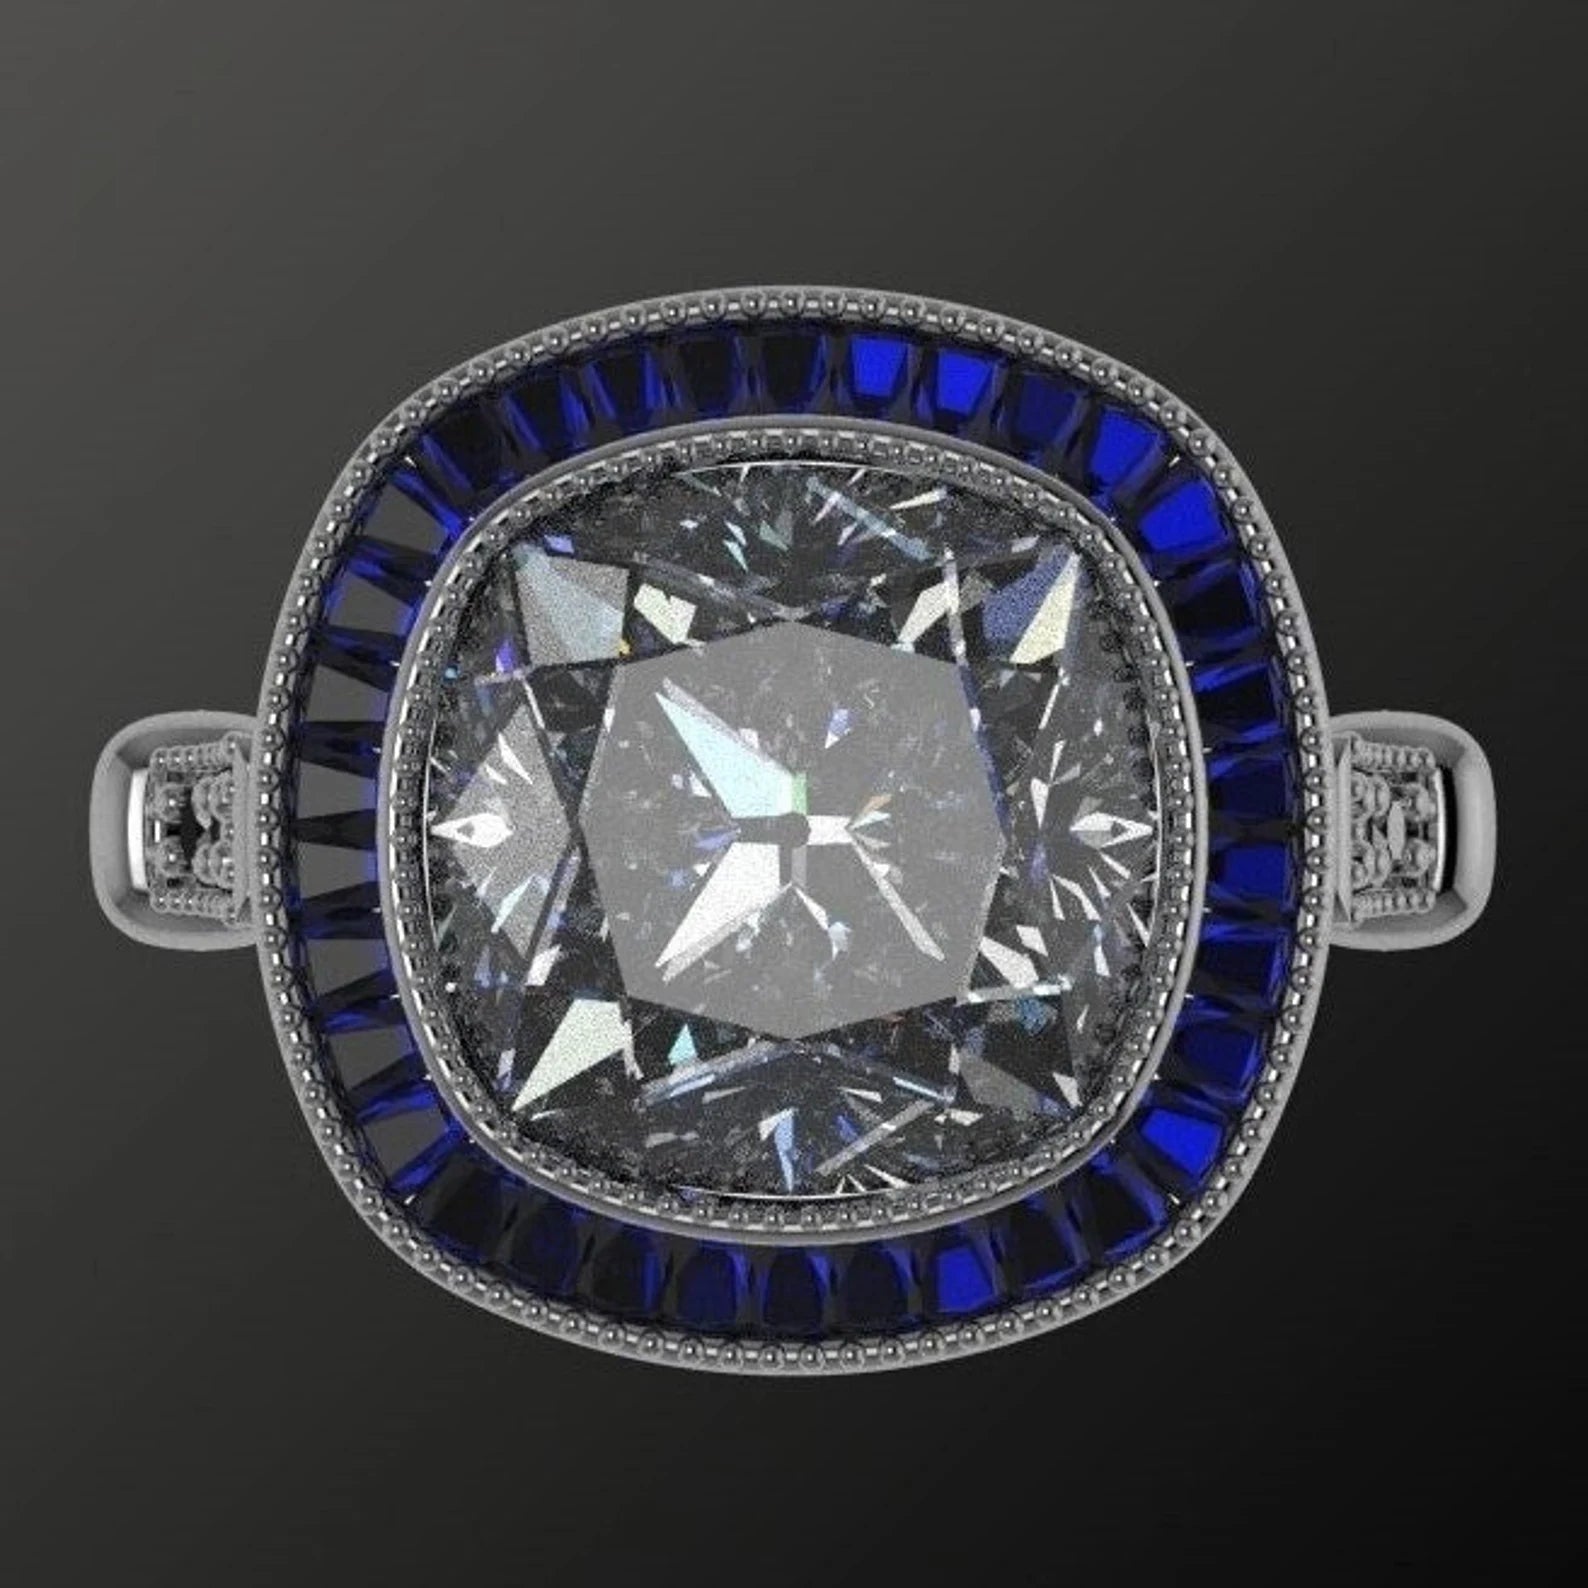 vivian ring - 4 carat old mine cut cushion moissanite and sapphire vintage engagement ring, ZAYA moissanite - J Hollywood Designs